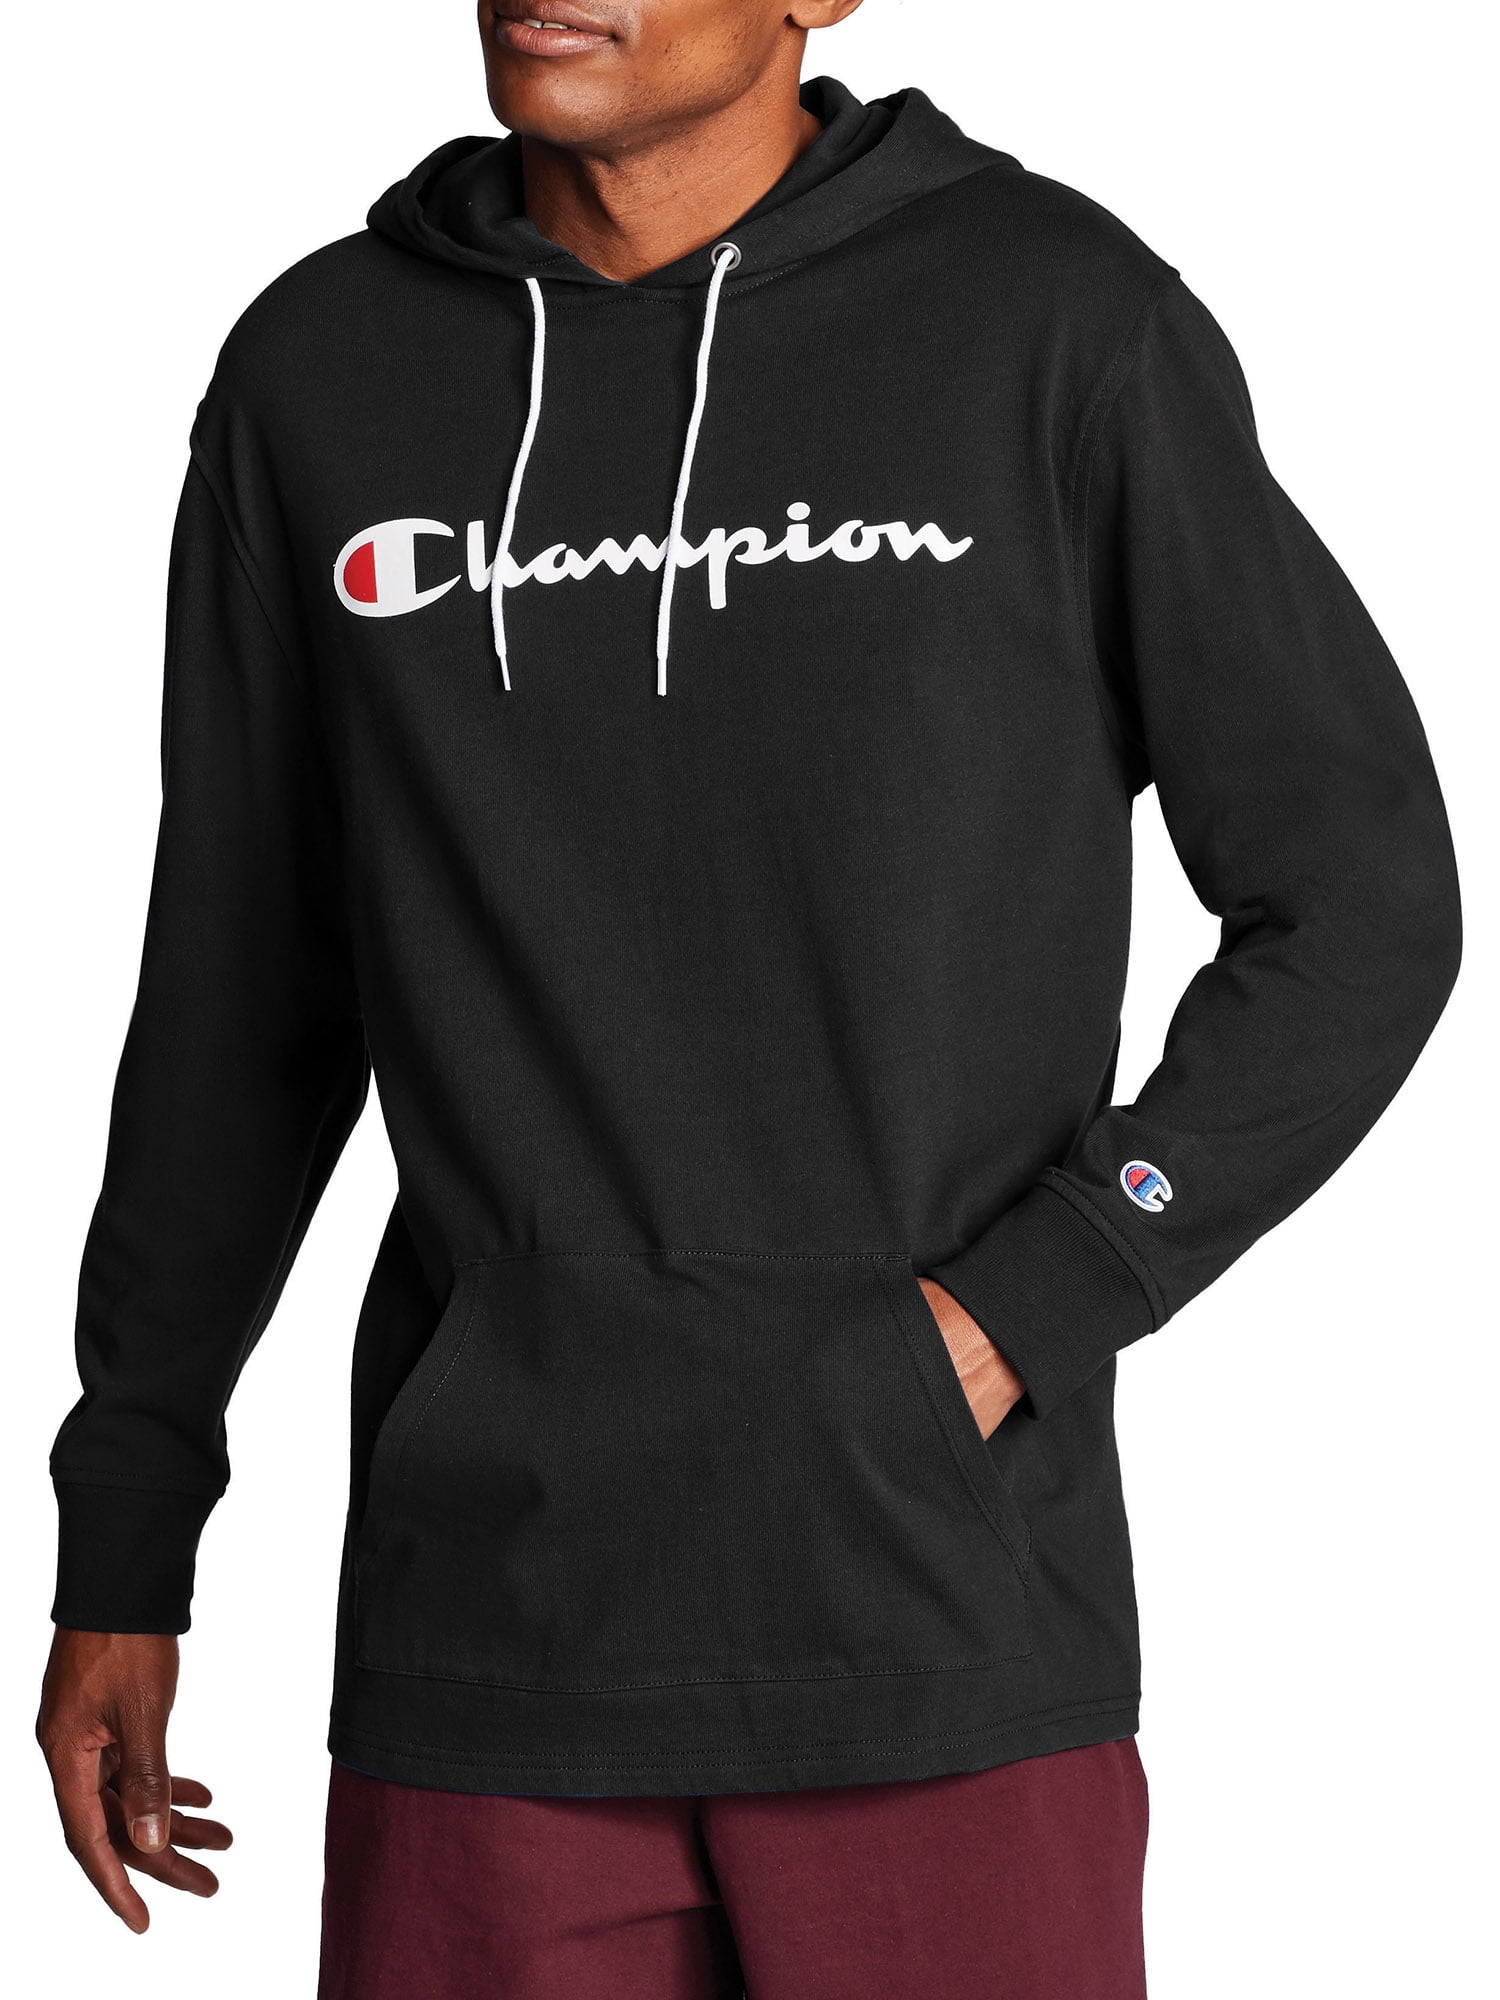 champion hoodie at walmart